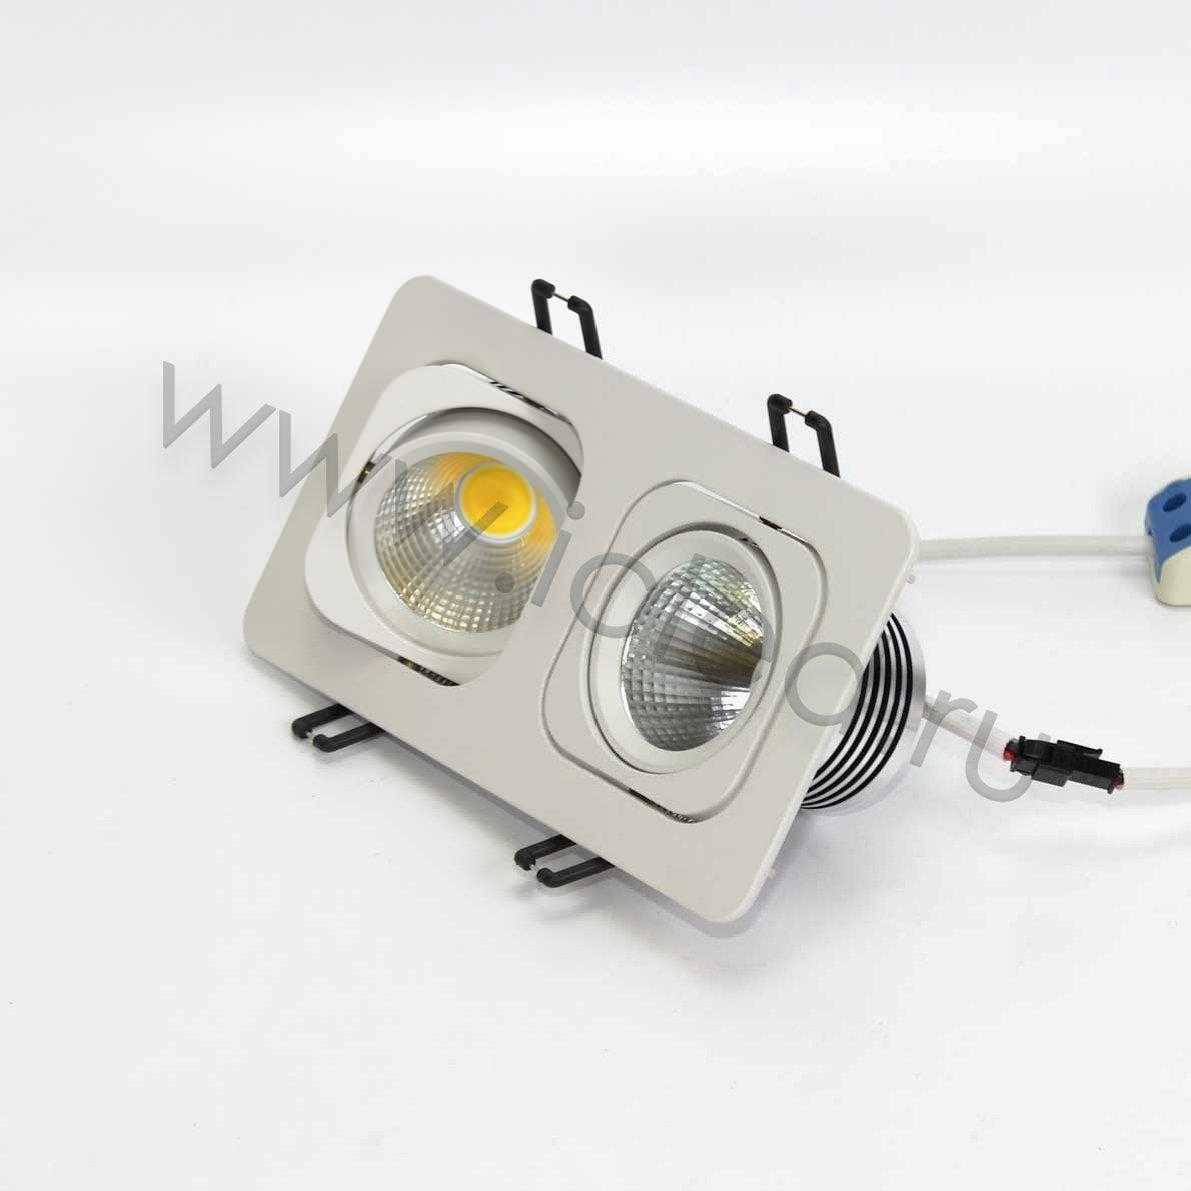 Светодиодные светильники Светодиодный светильник встраиваемый 98.2 series white housing BW156 (10W,220V,day white)